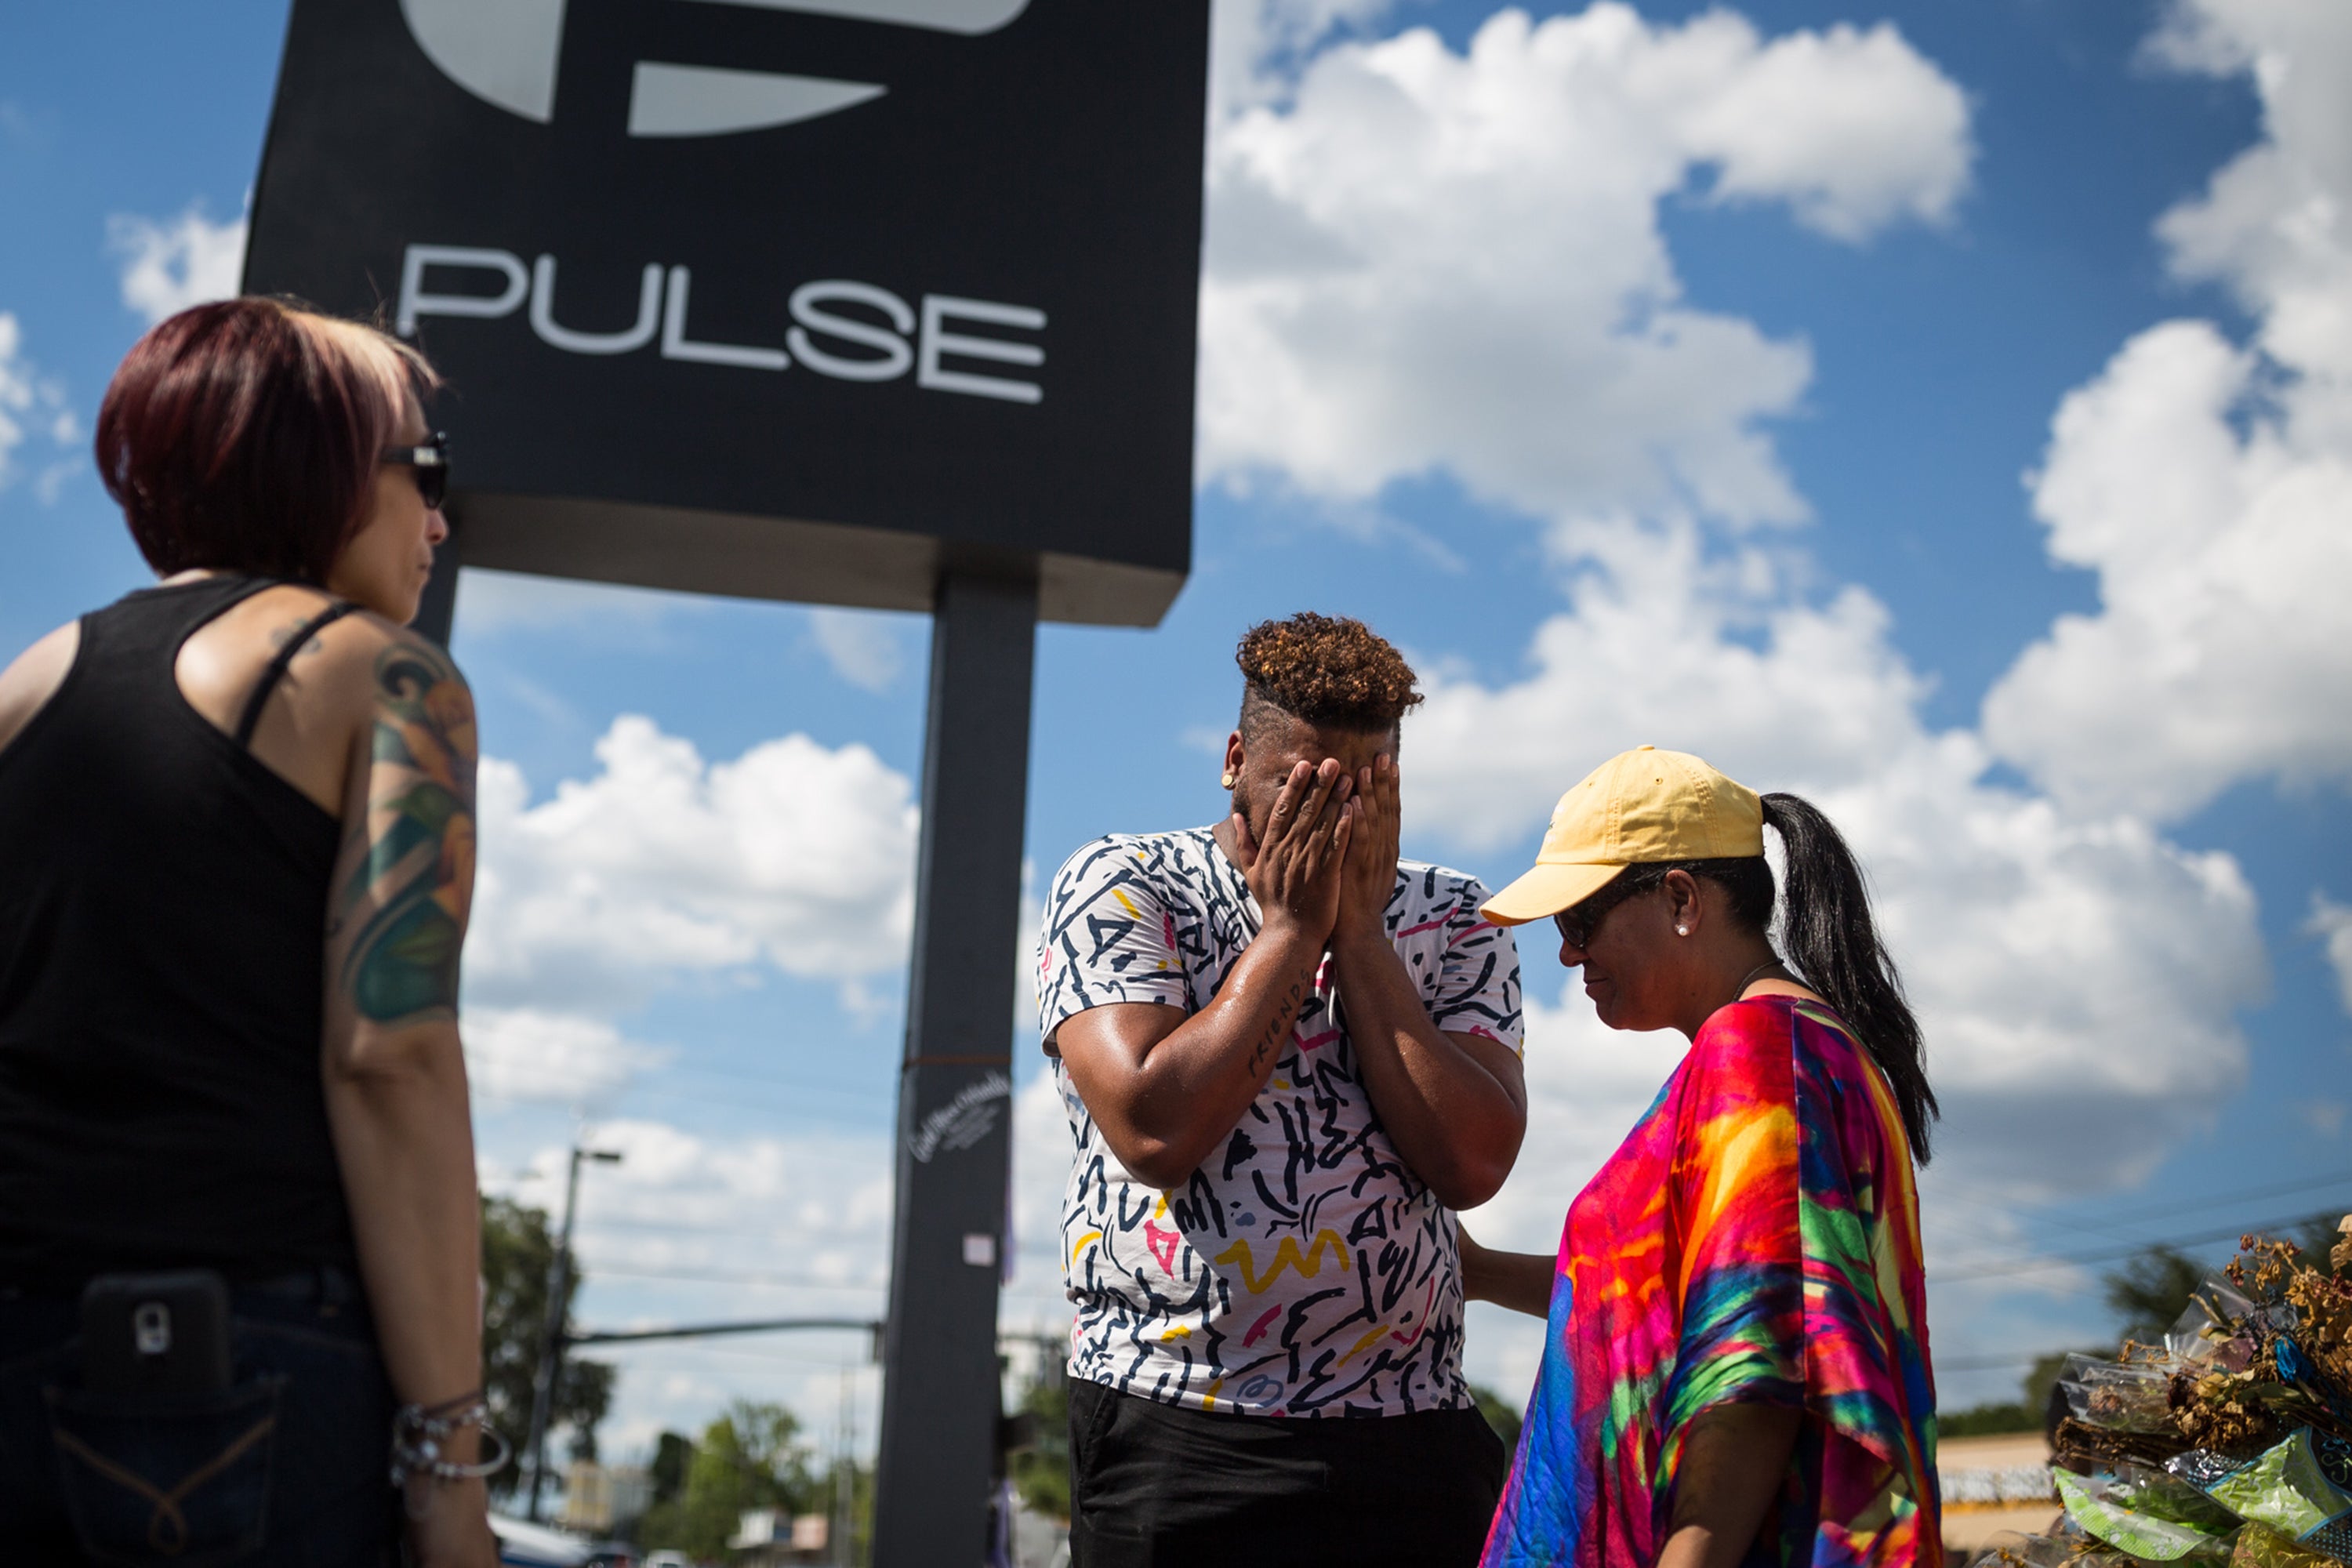 Orlando Hospitals Won't Bill Victims in Pulse Shooting
